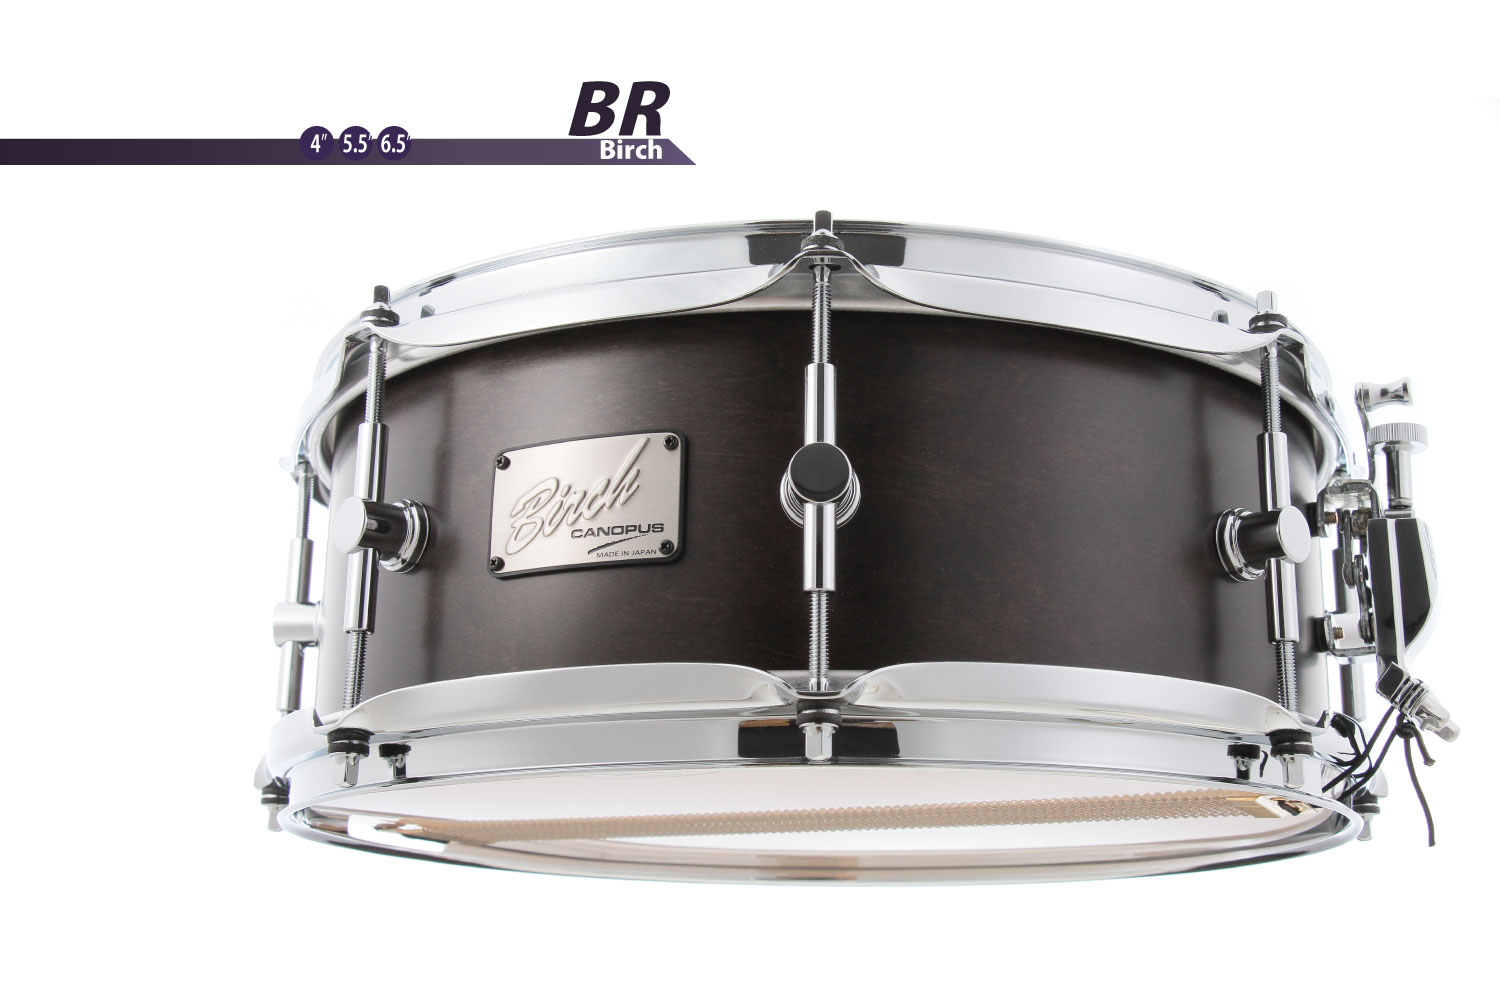 Birch Snare Drum【バーチ スネアドラム】 | CANOPUS DRUMS